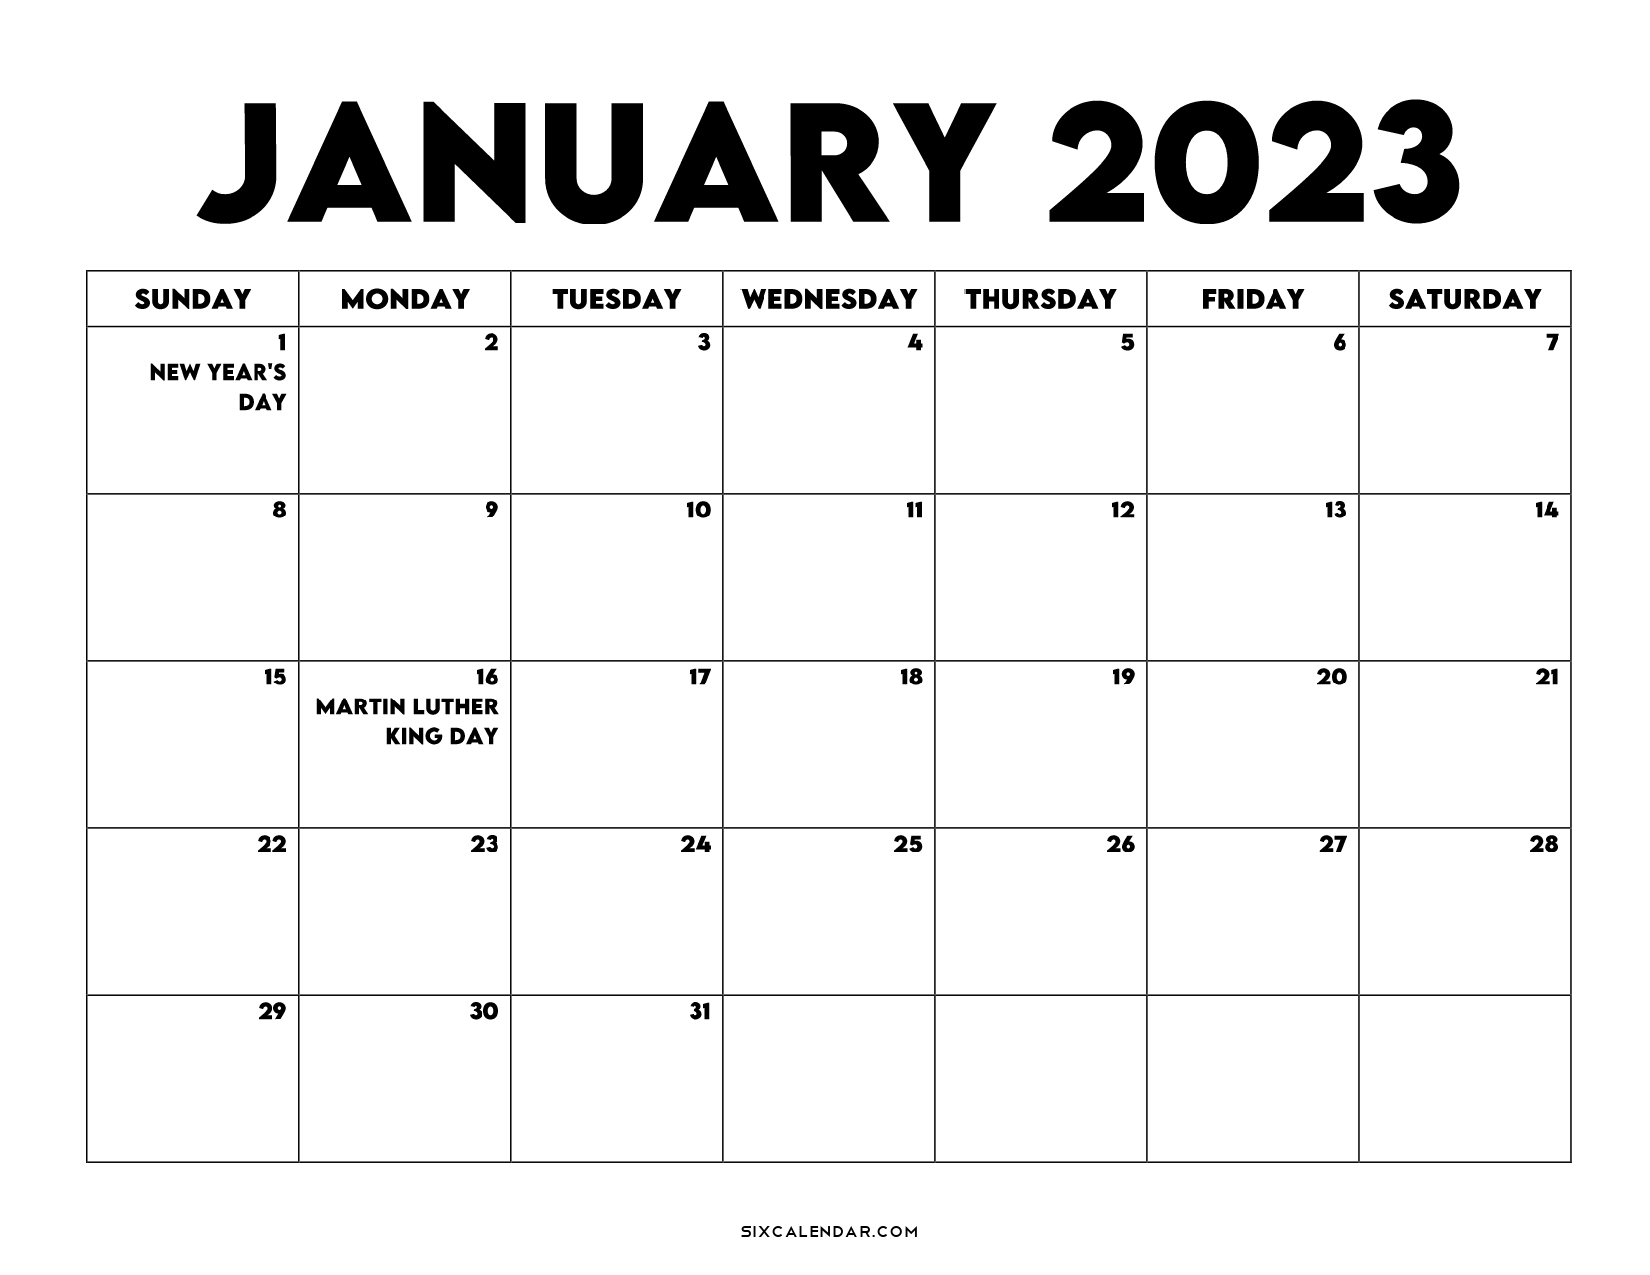 Have Any Option to Print January 2023 Calendar Printable?